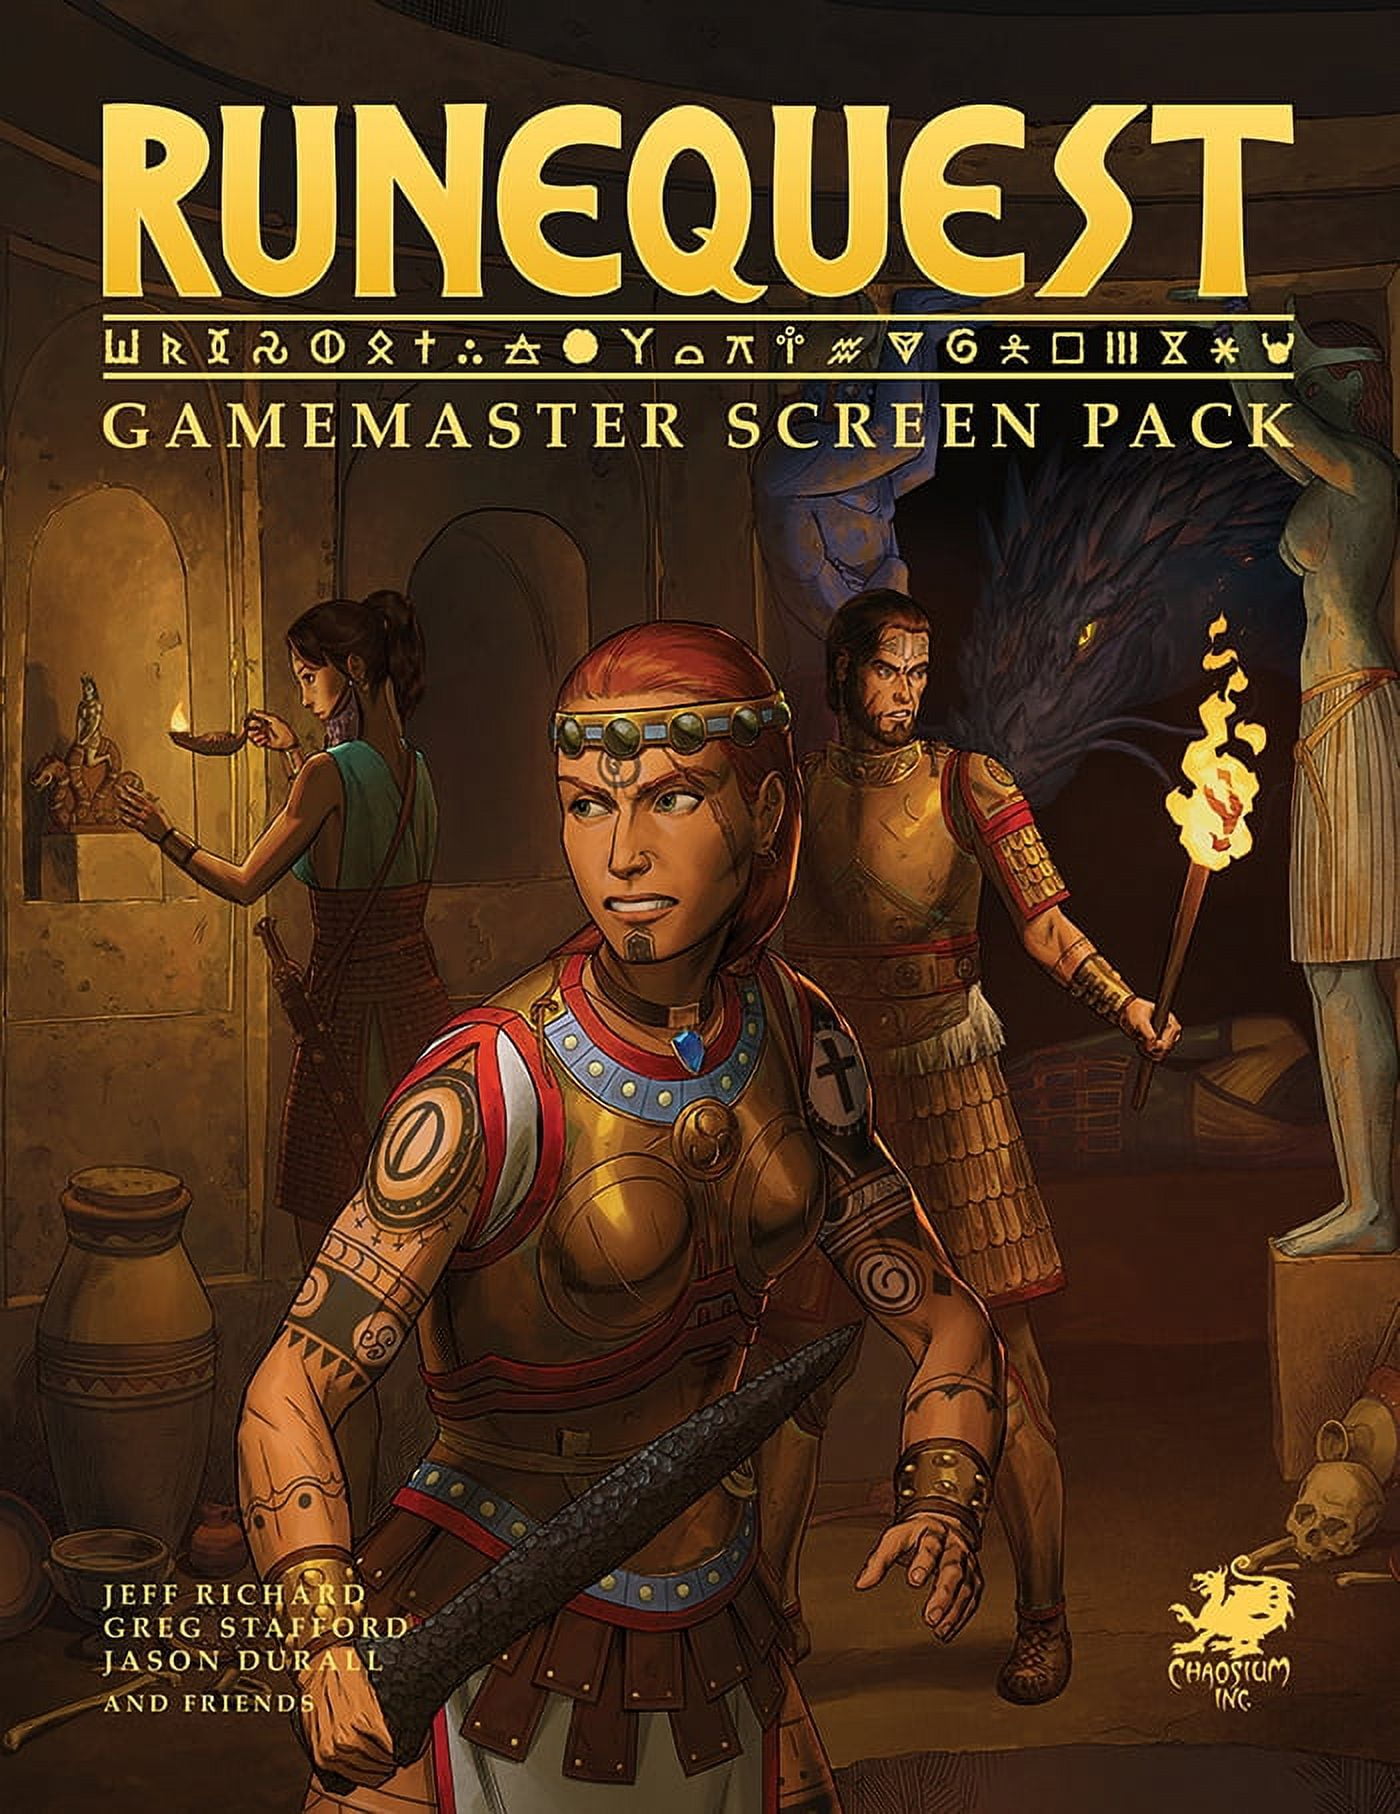 Cao4029 Runequest Gamemaster Screen Pack